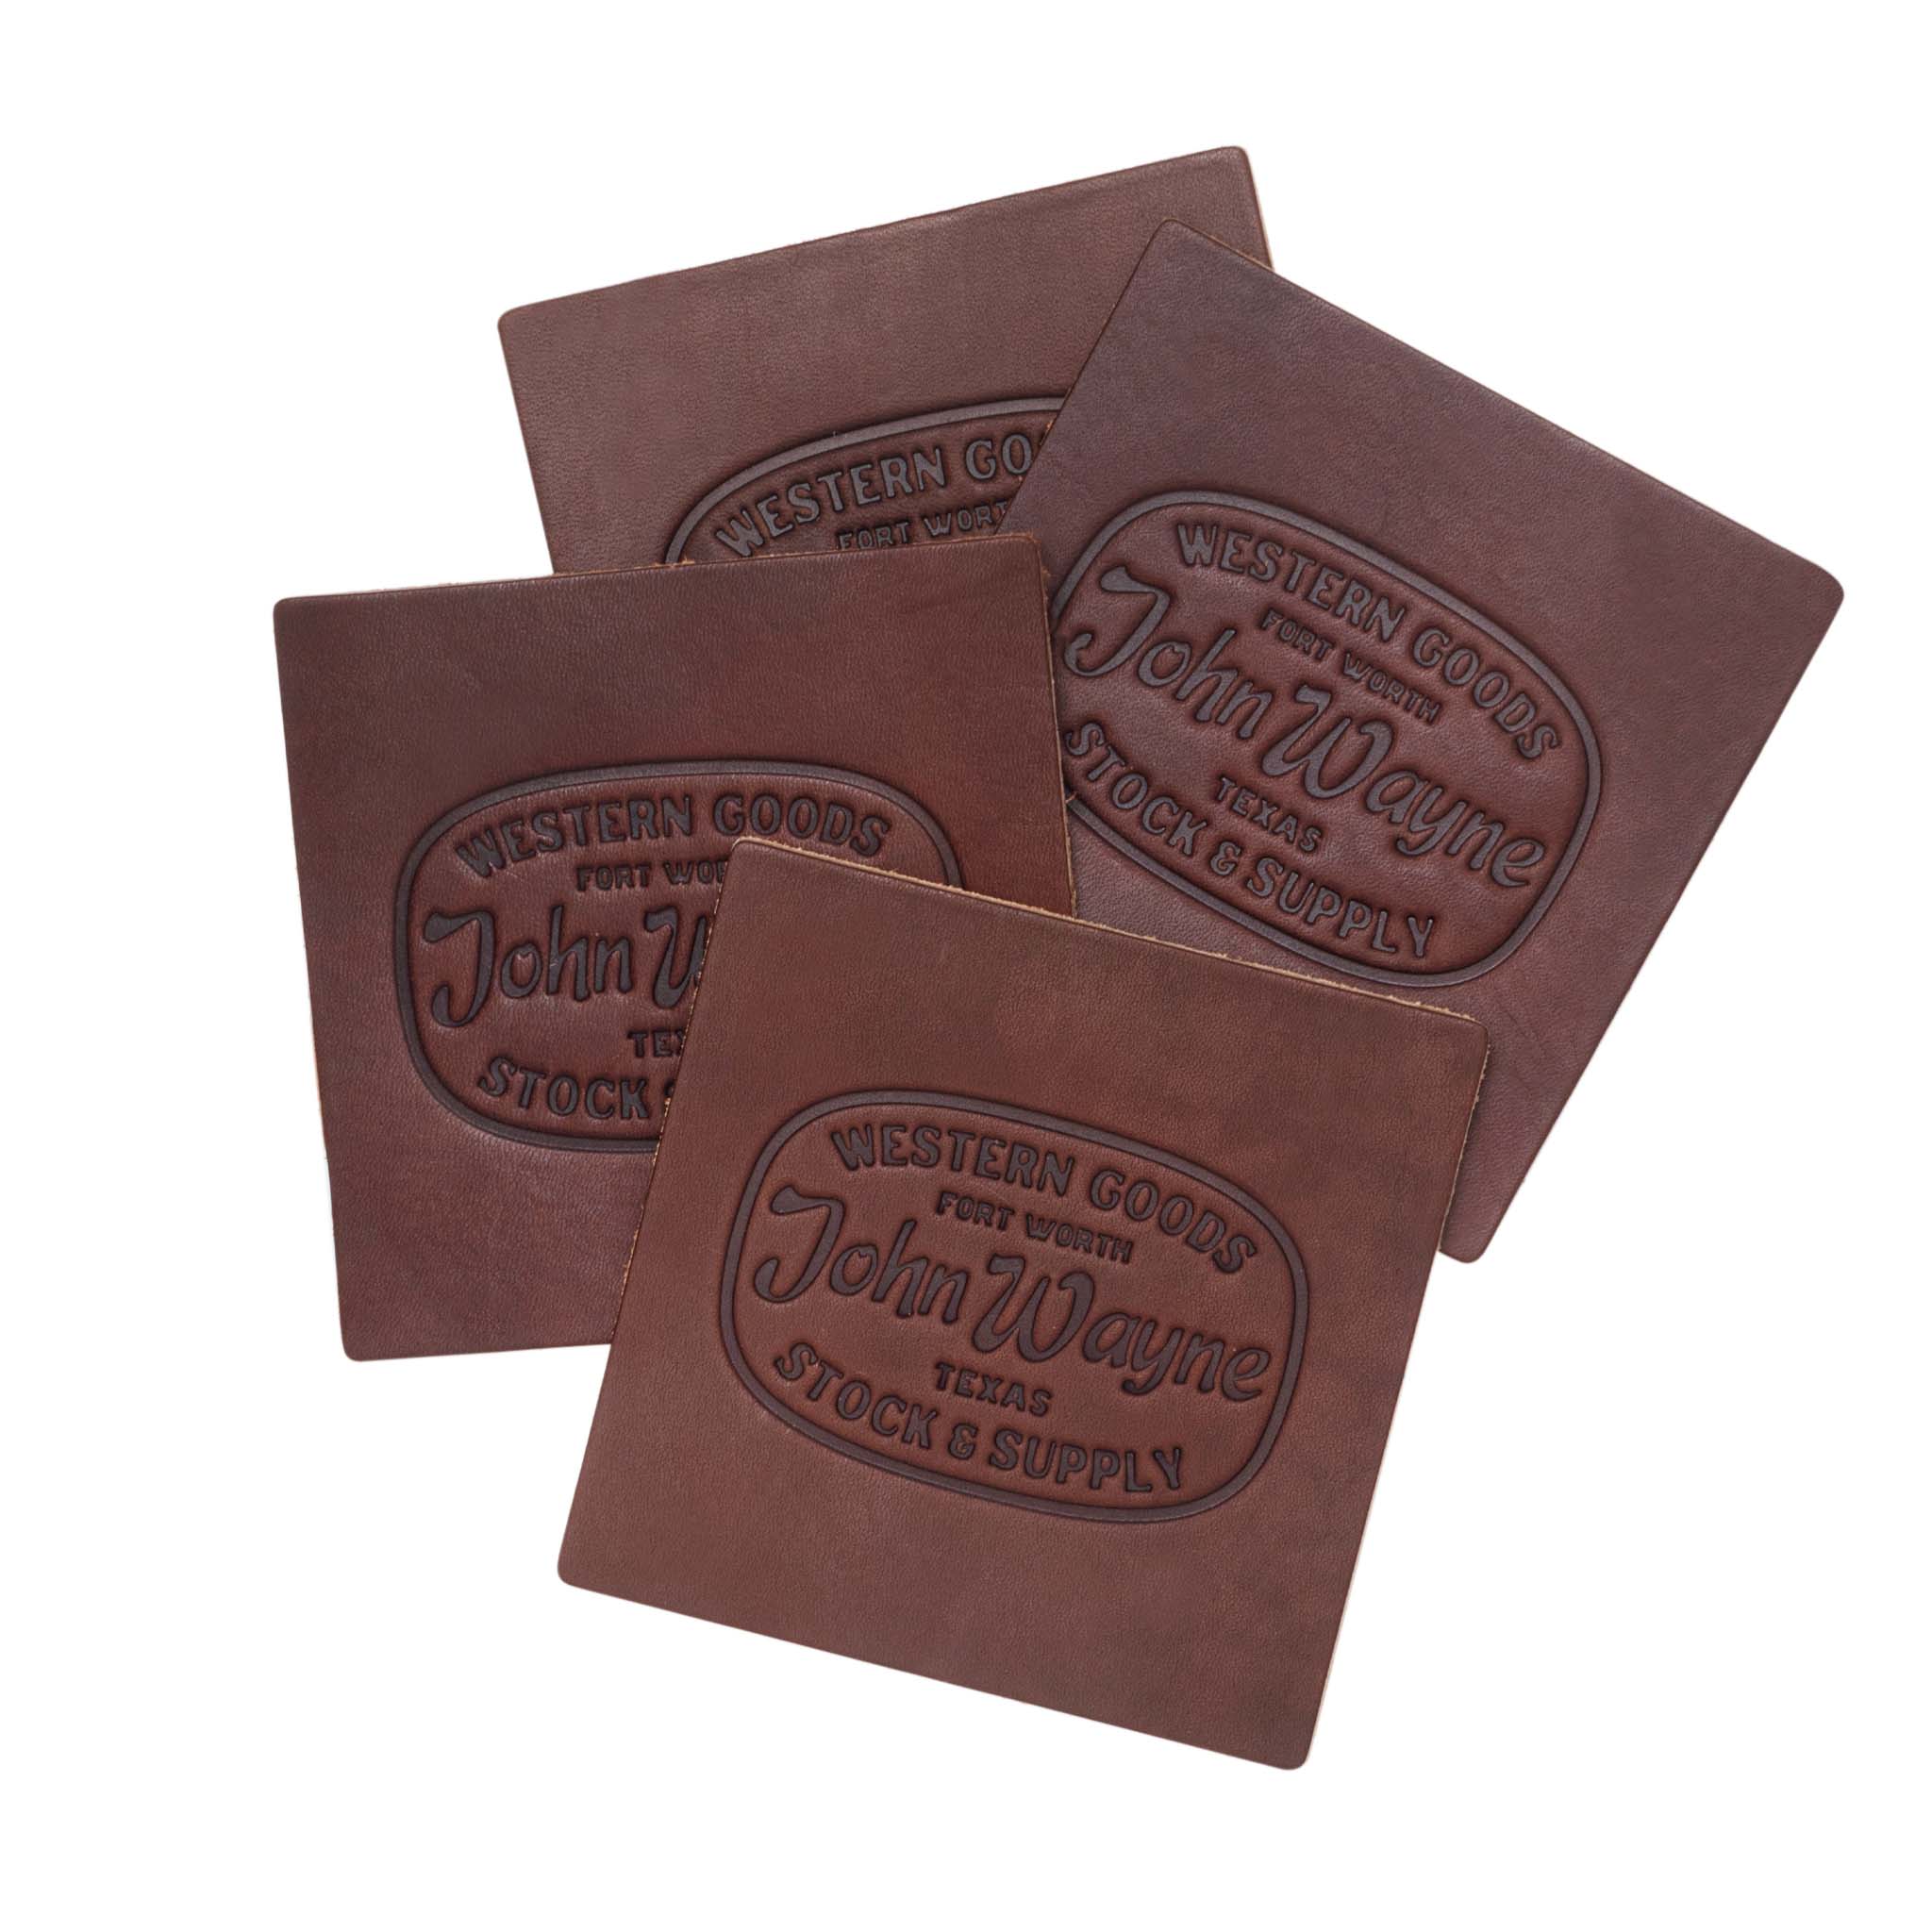 4 leather western goods john wayne texas stock & supply coasters